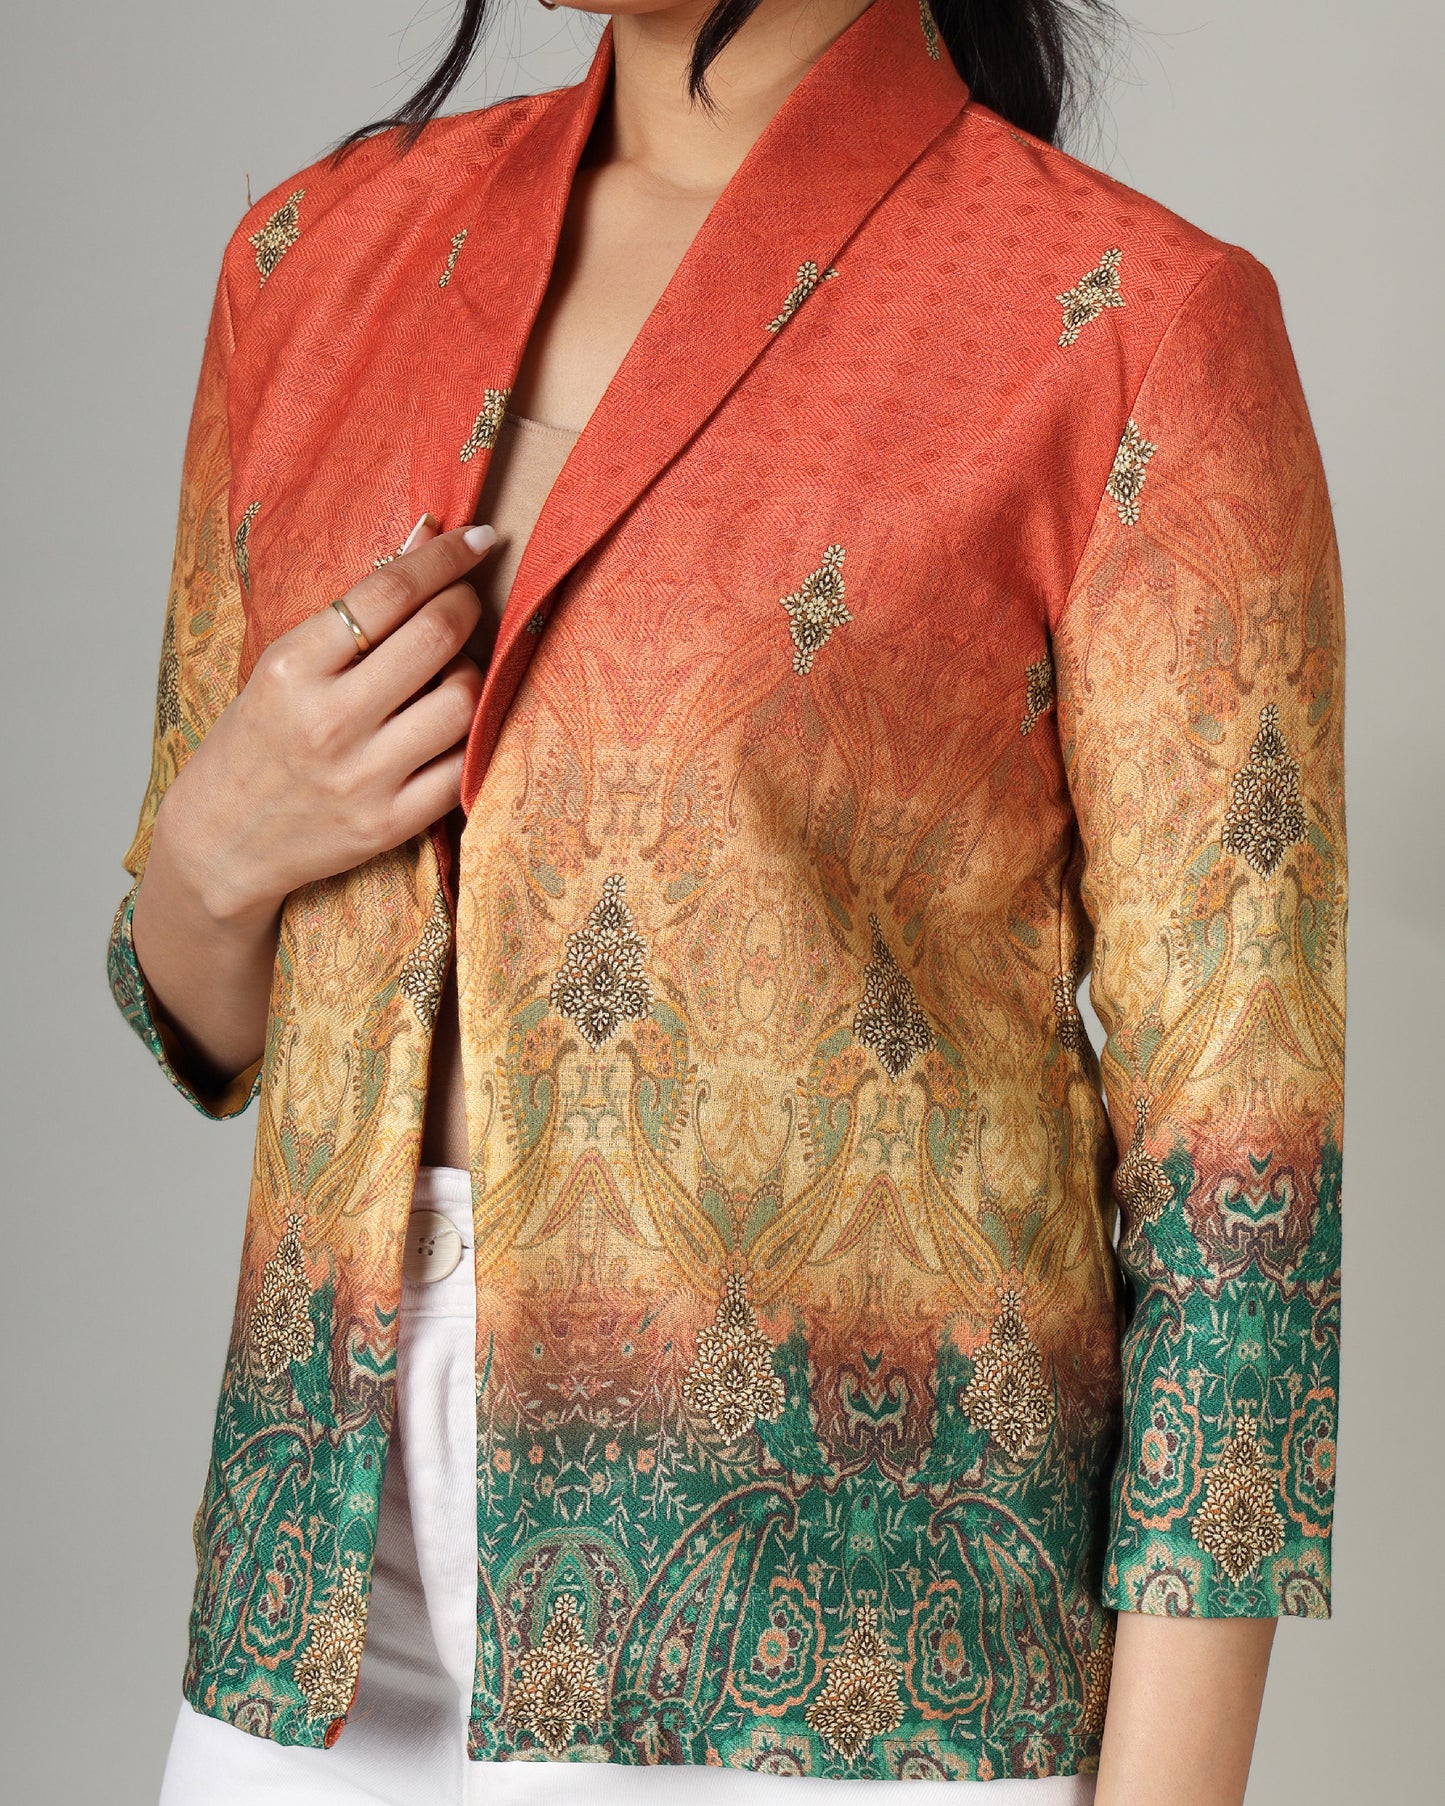 Exclusively Unique Designed Ethnic Women's Jacket